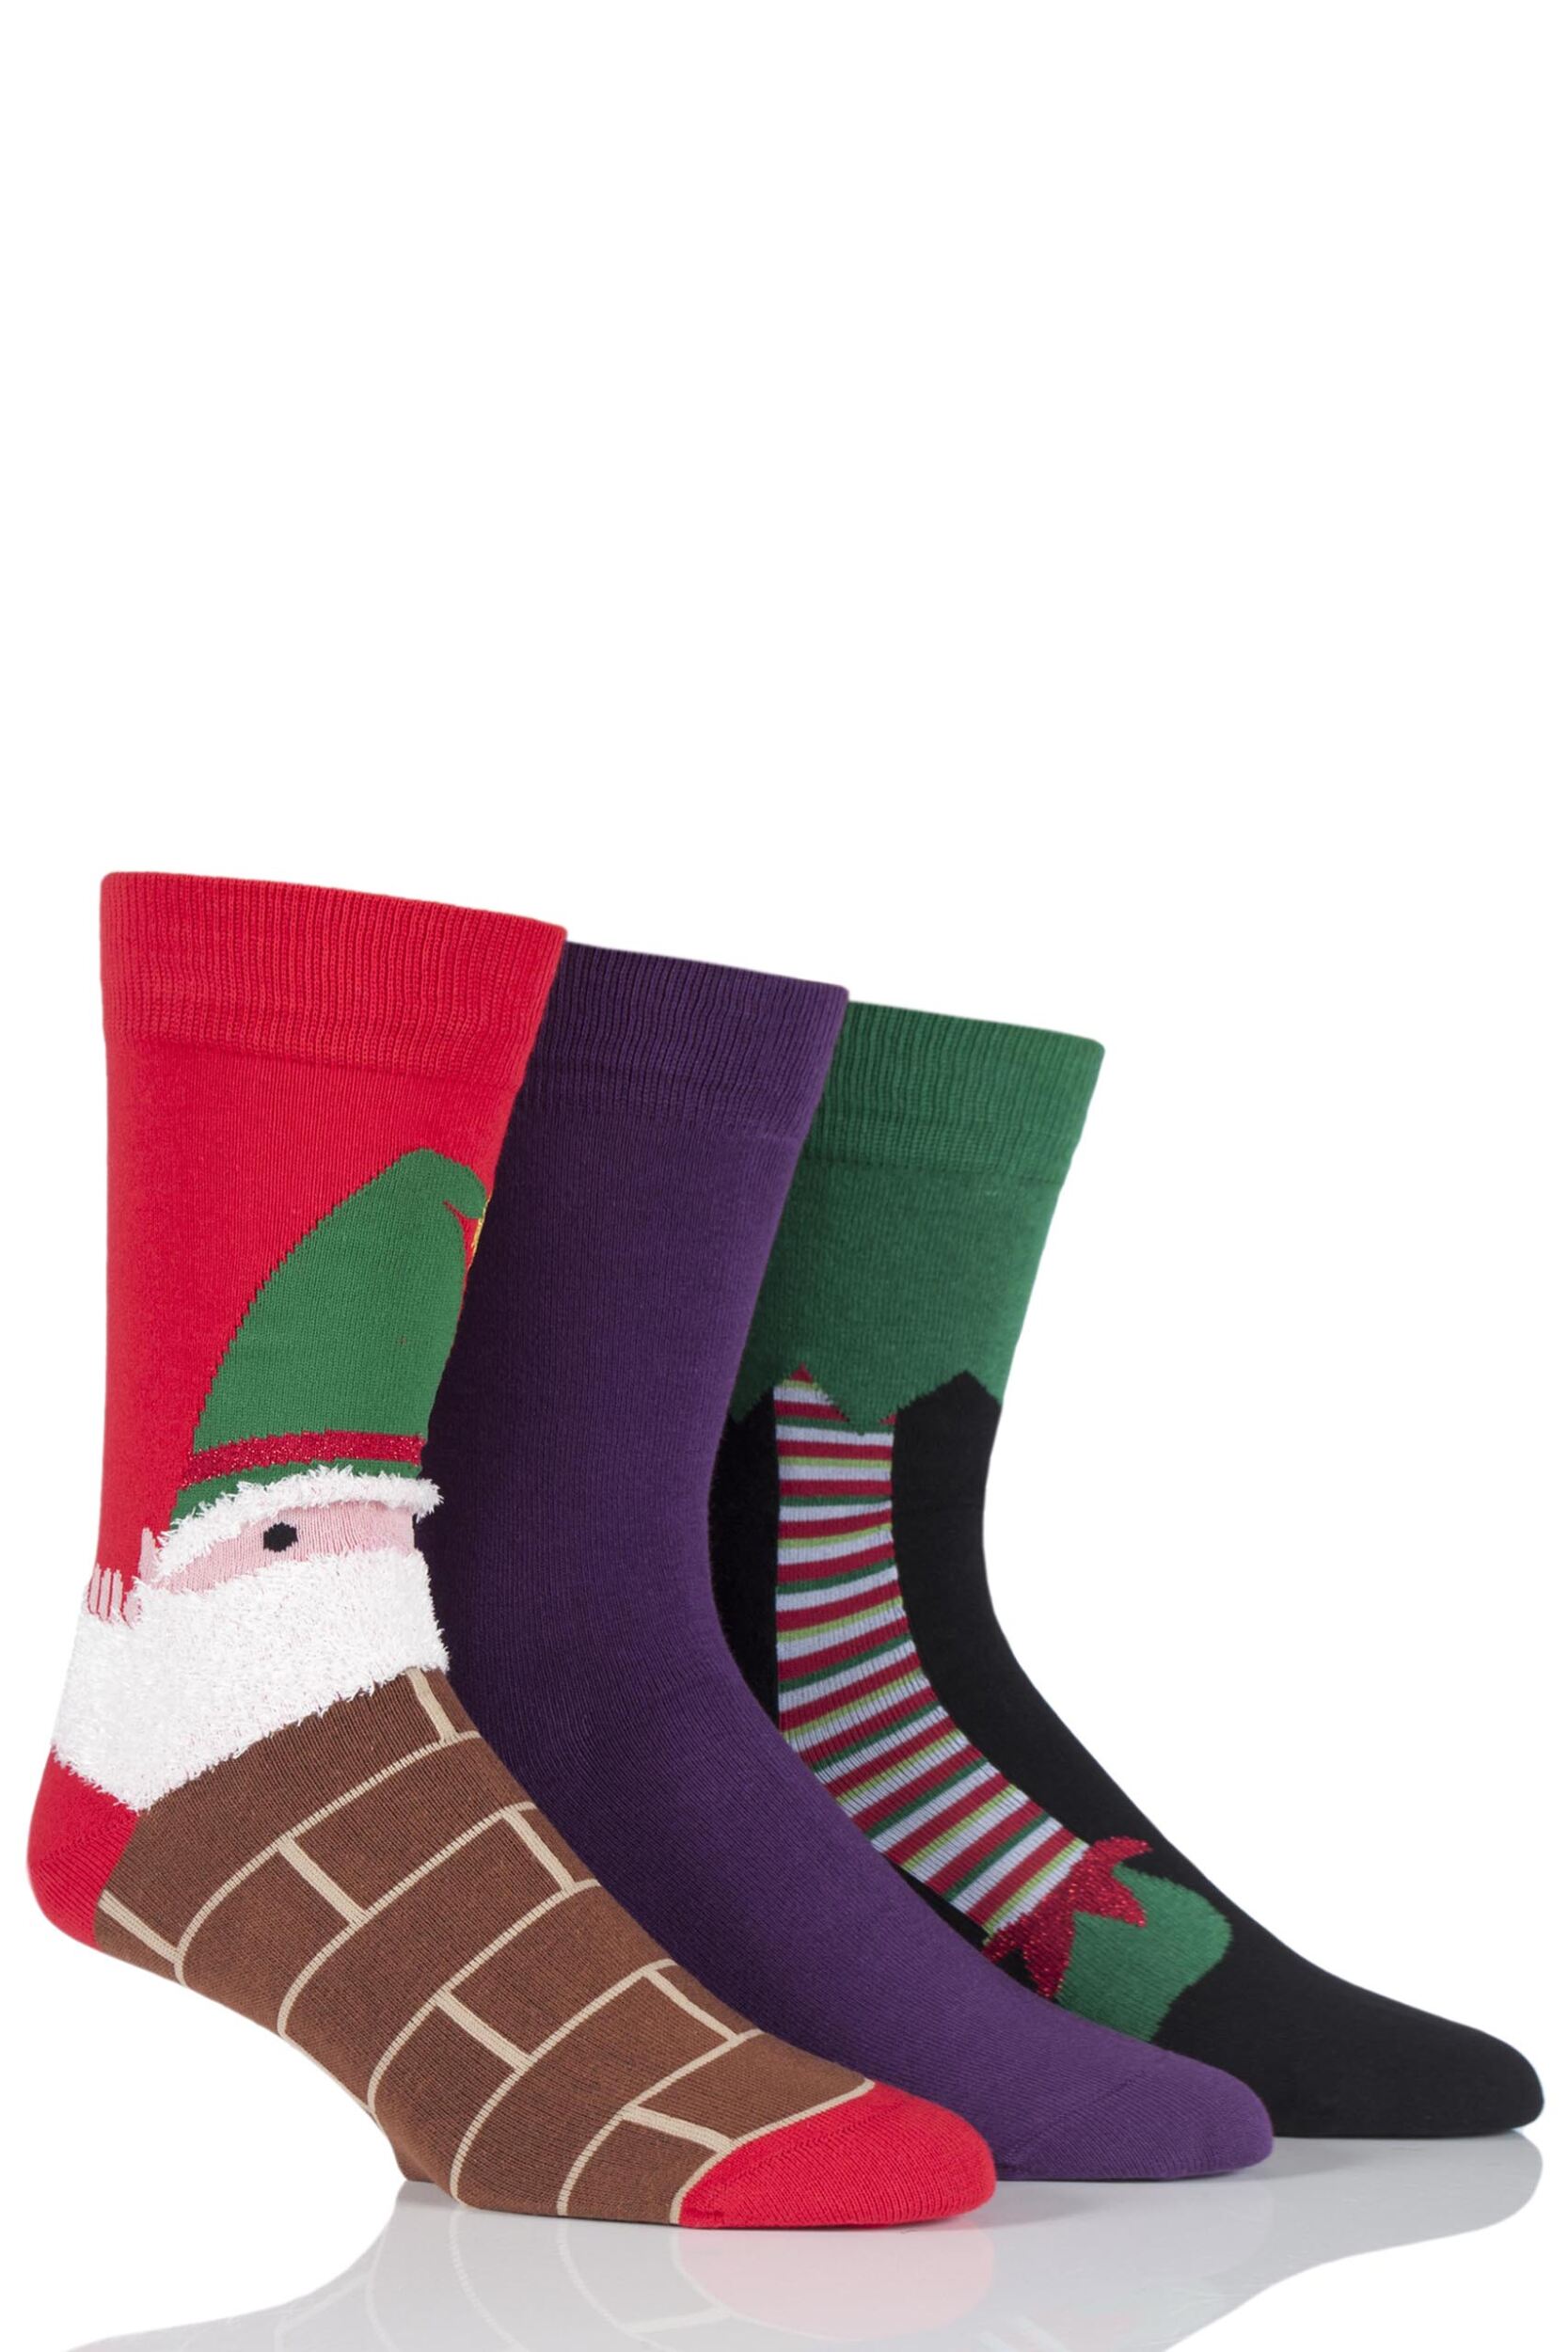 Mens 3 Pair SockShop Just For Fun Elf Christmas Design Novelty Cotton ...